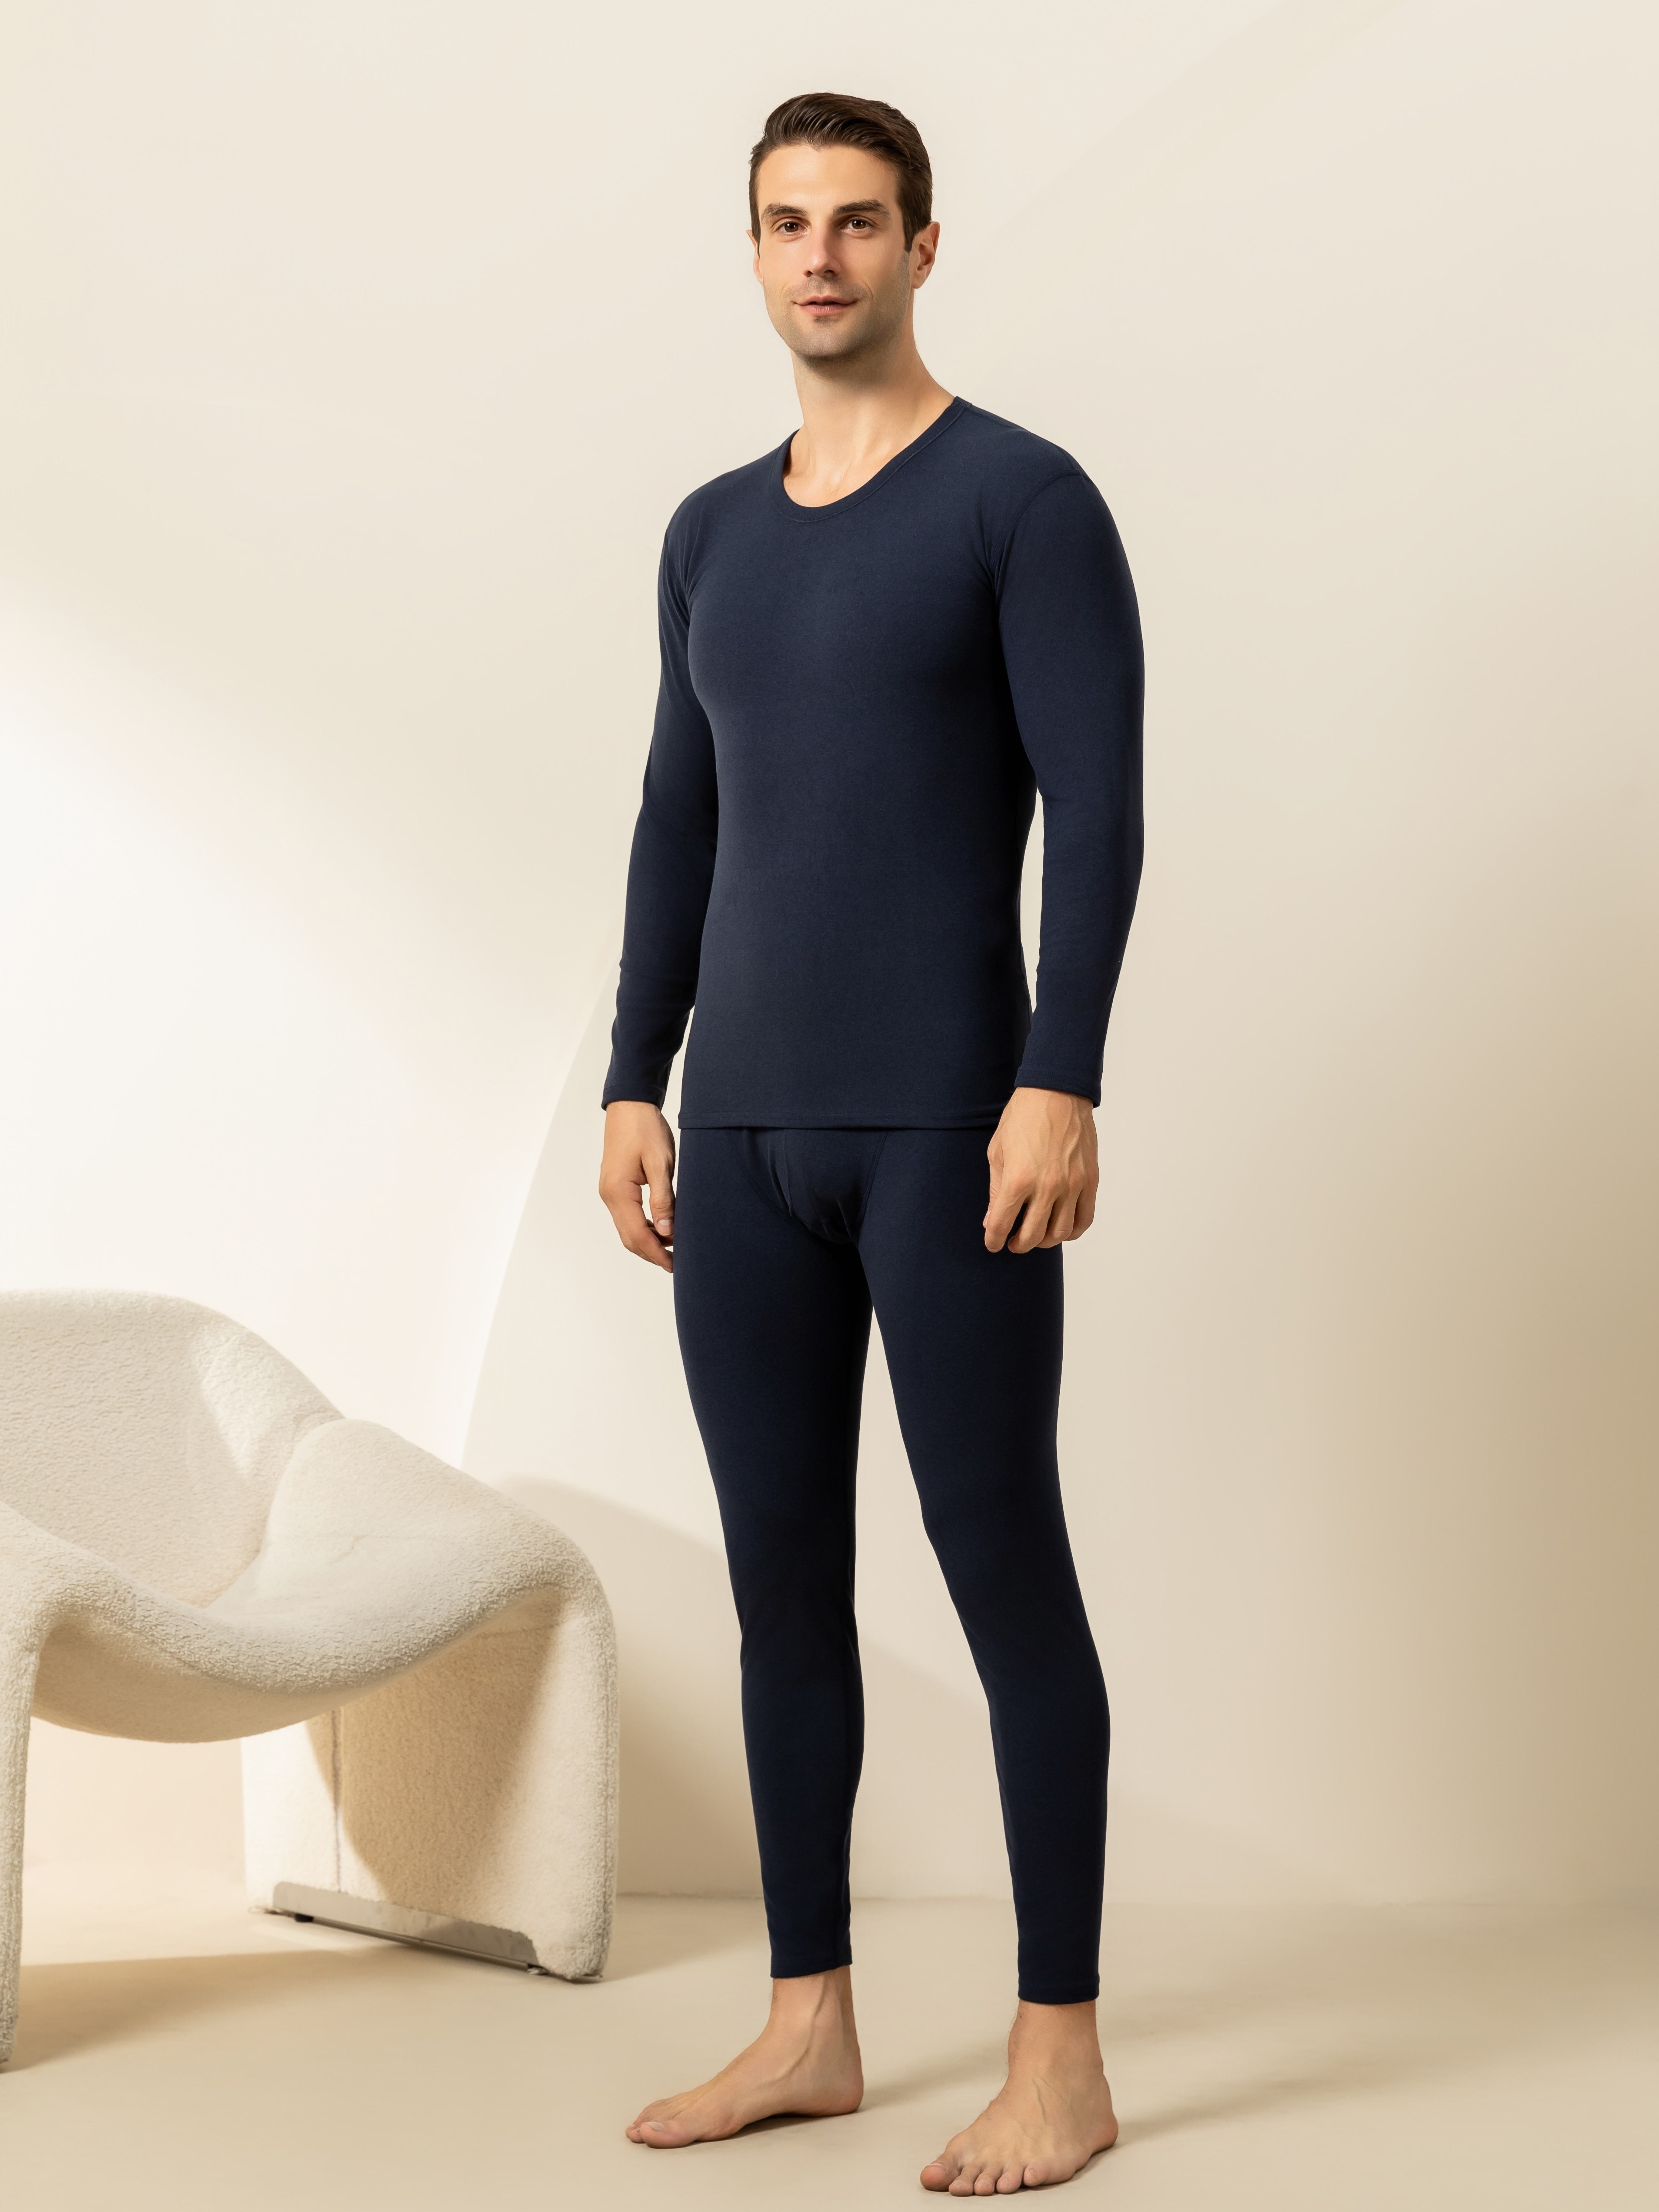 Men's 2 Piece Thermal Underwear Set Top Bottom Long Sleeve Pants 